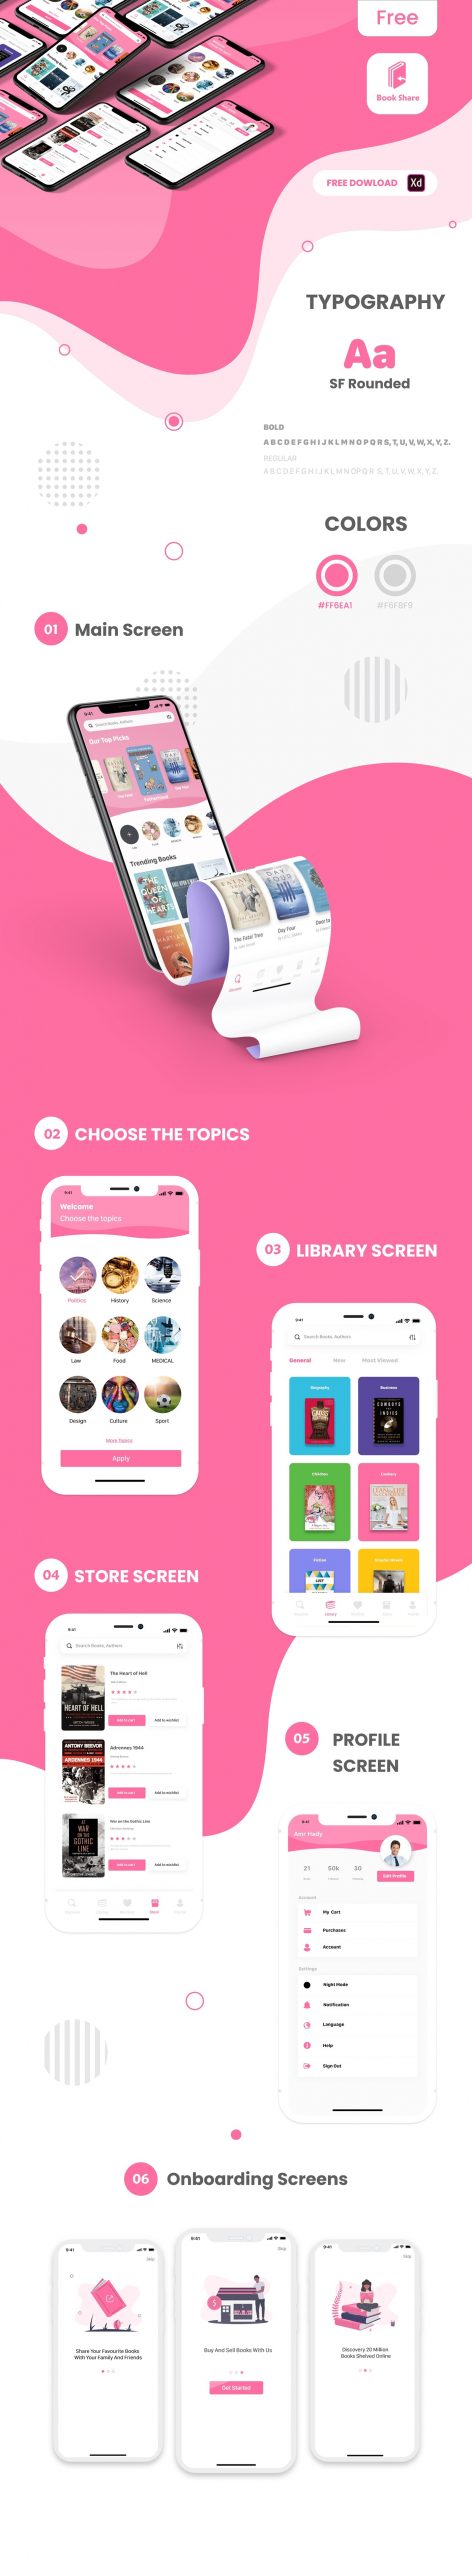 Free Bookshare App UI Design XD Template - Xd File